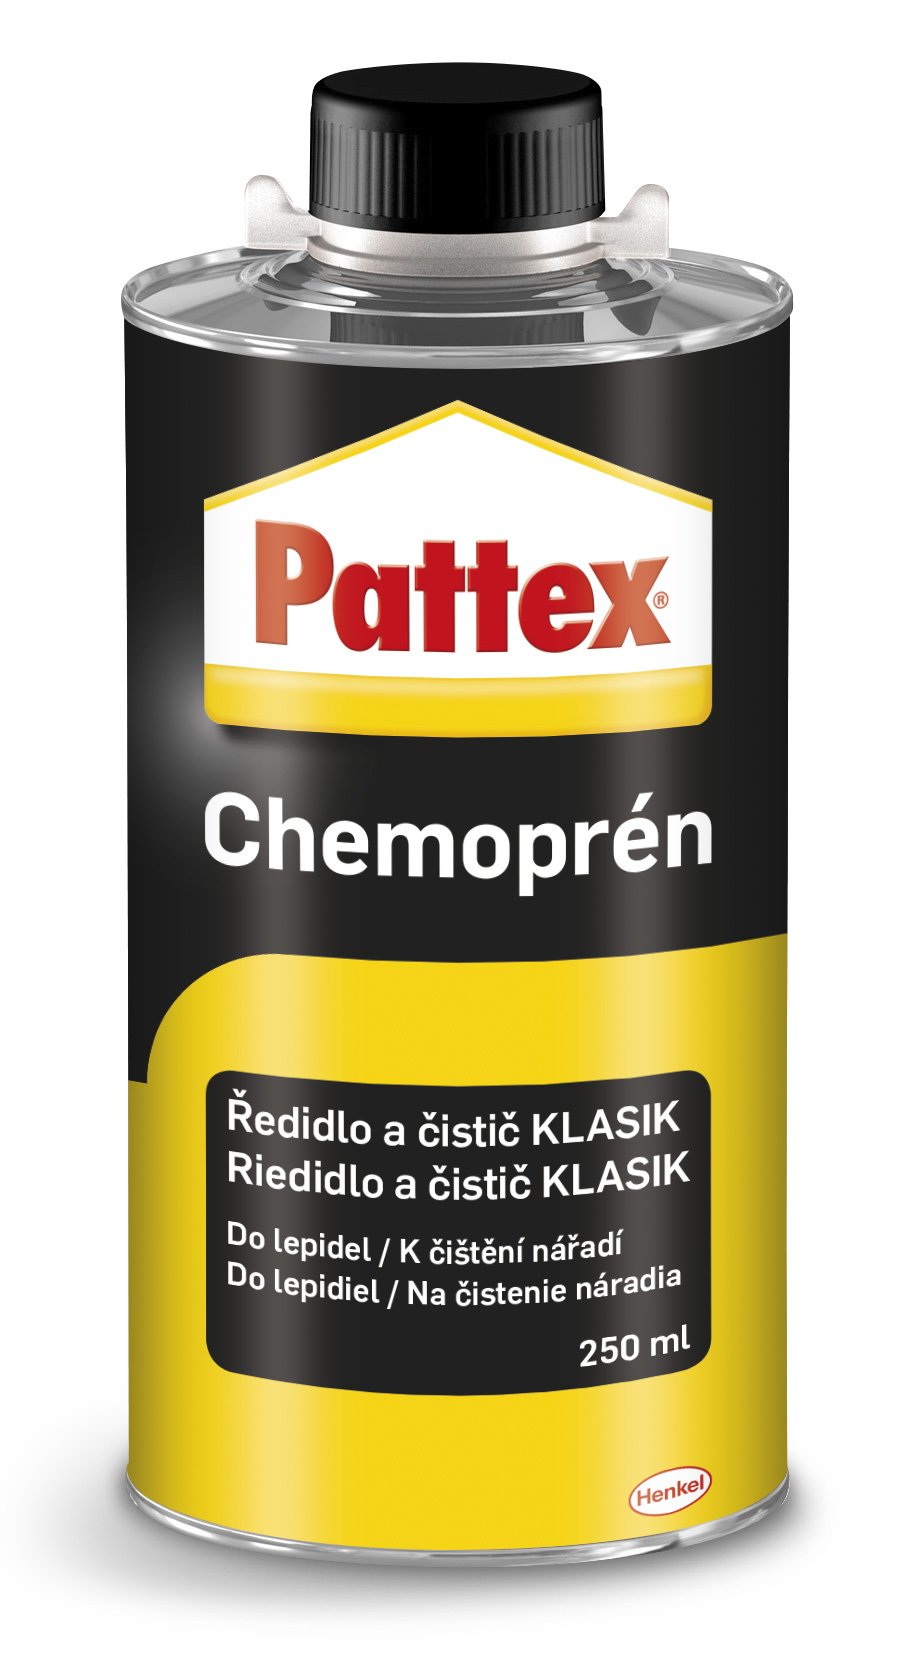 PATTEX CHEMOPRÉN - Riedidlo KLASIK